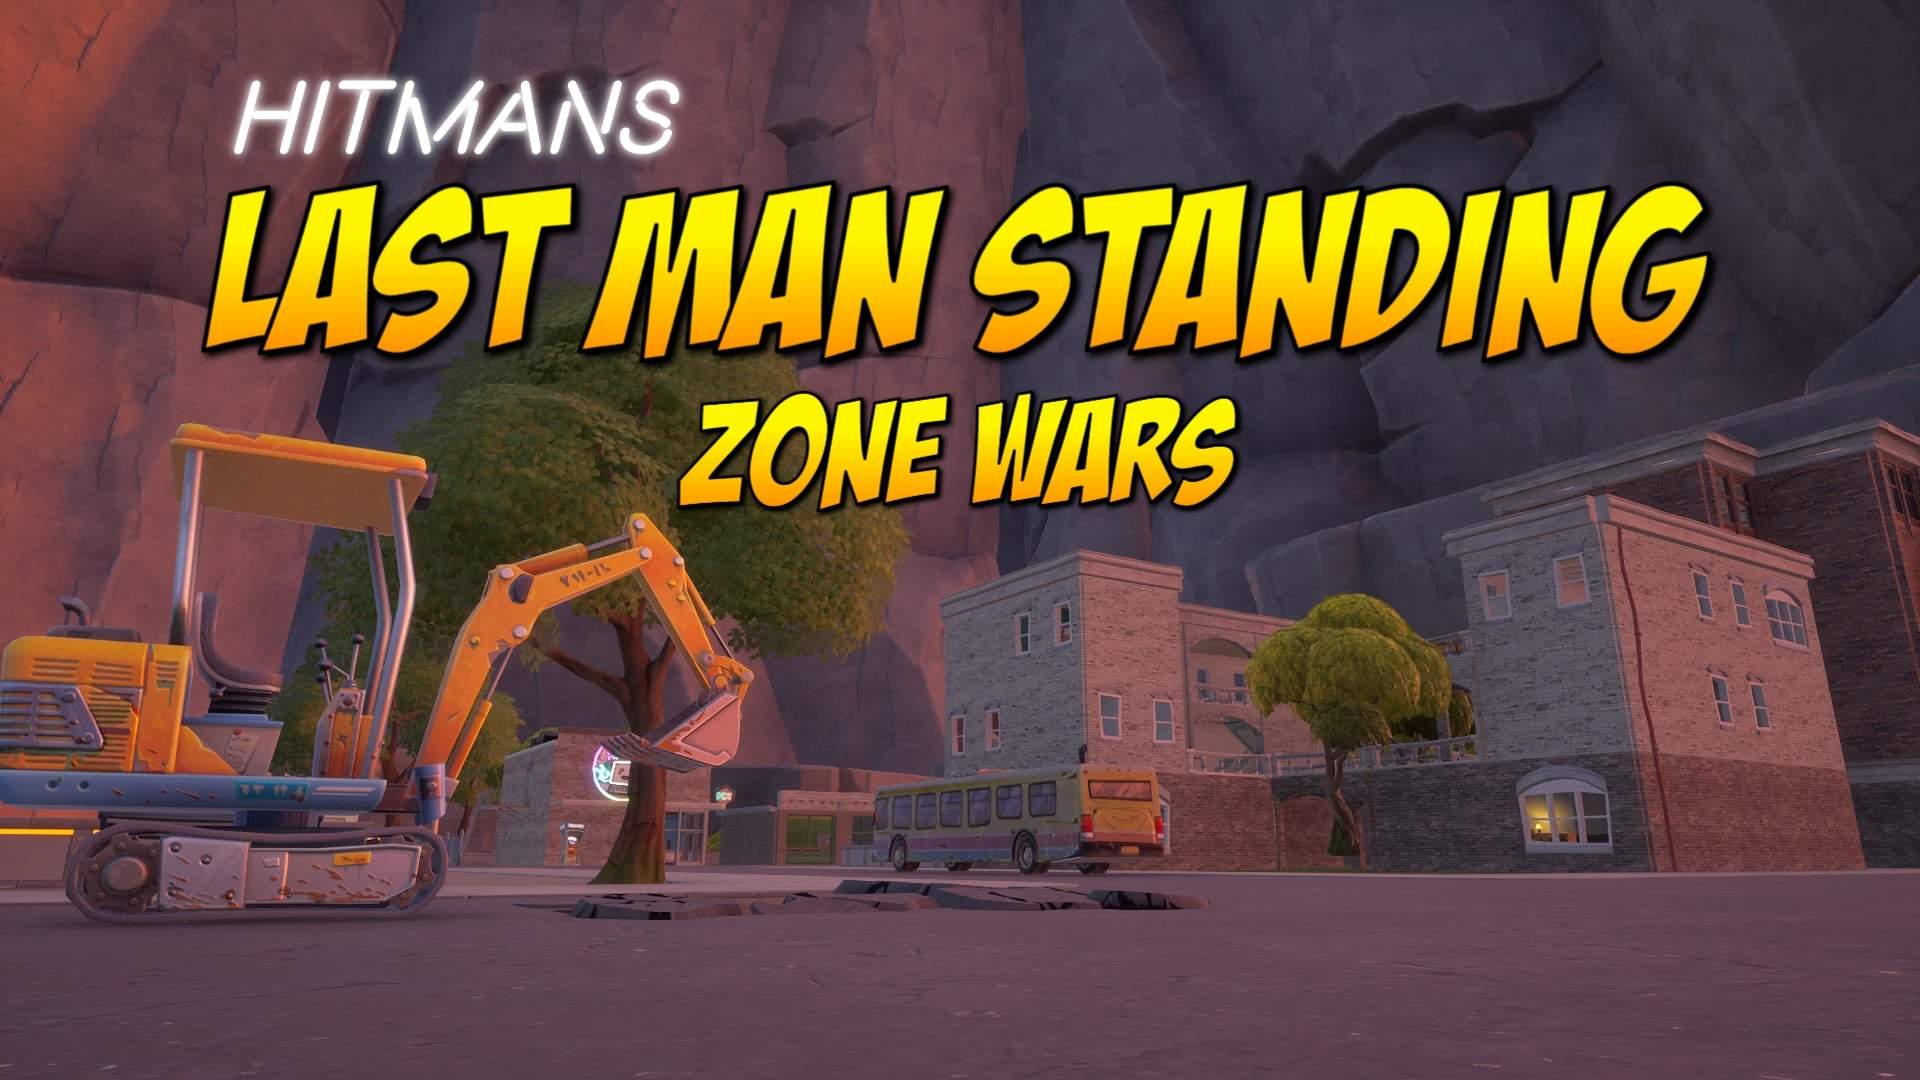 HITMANS Last man standing